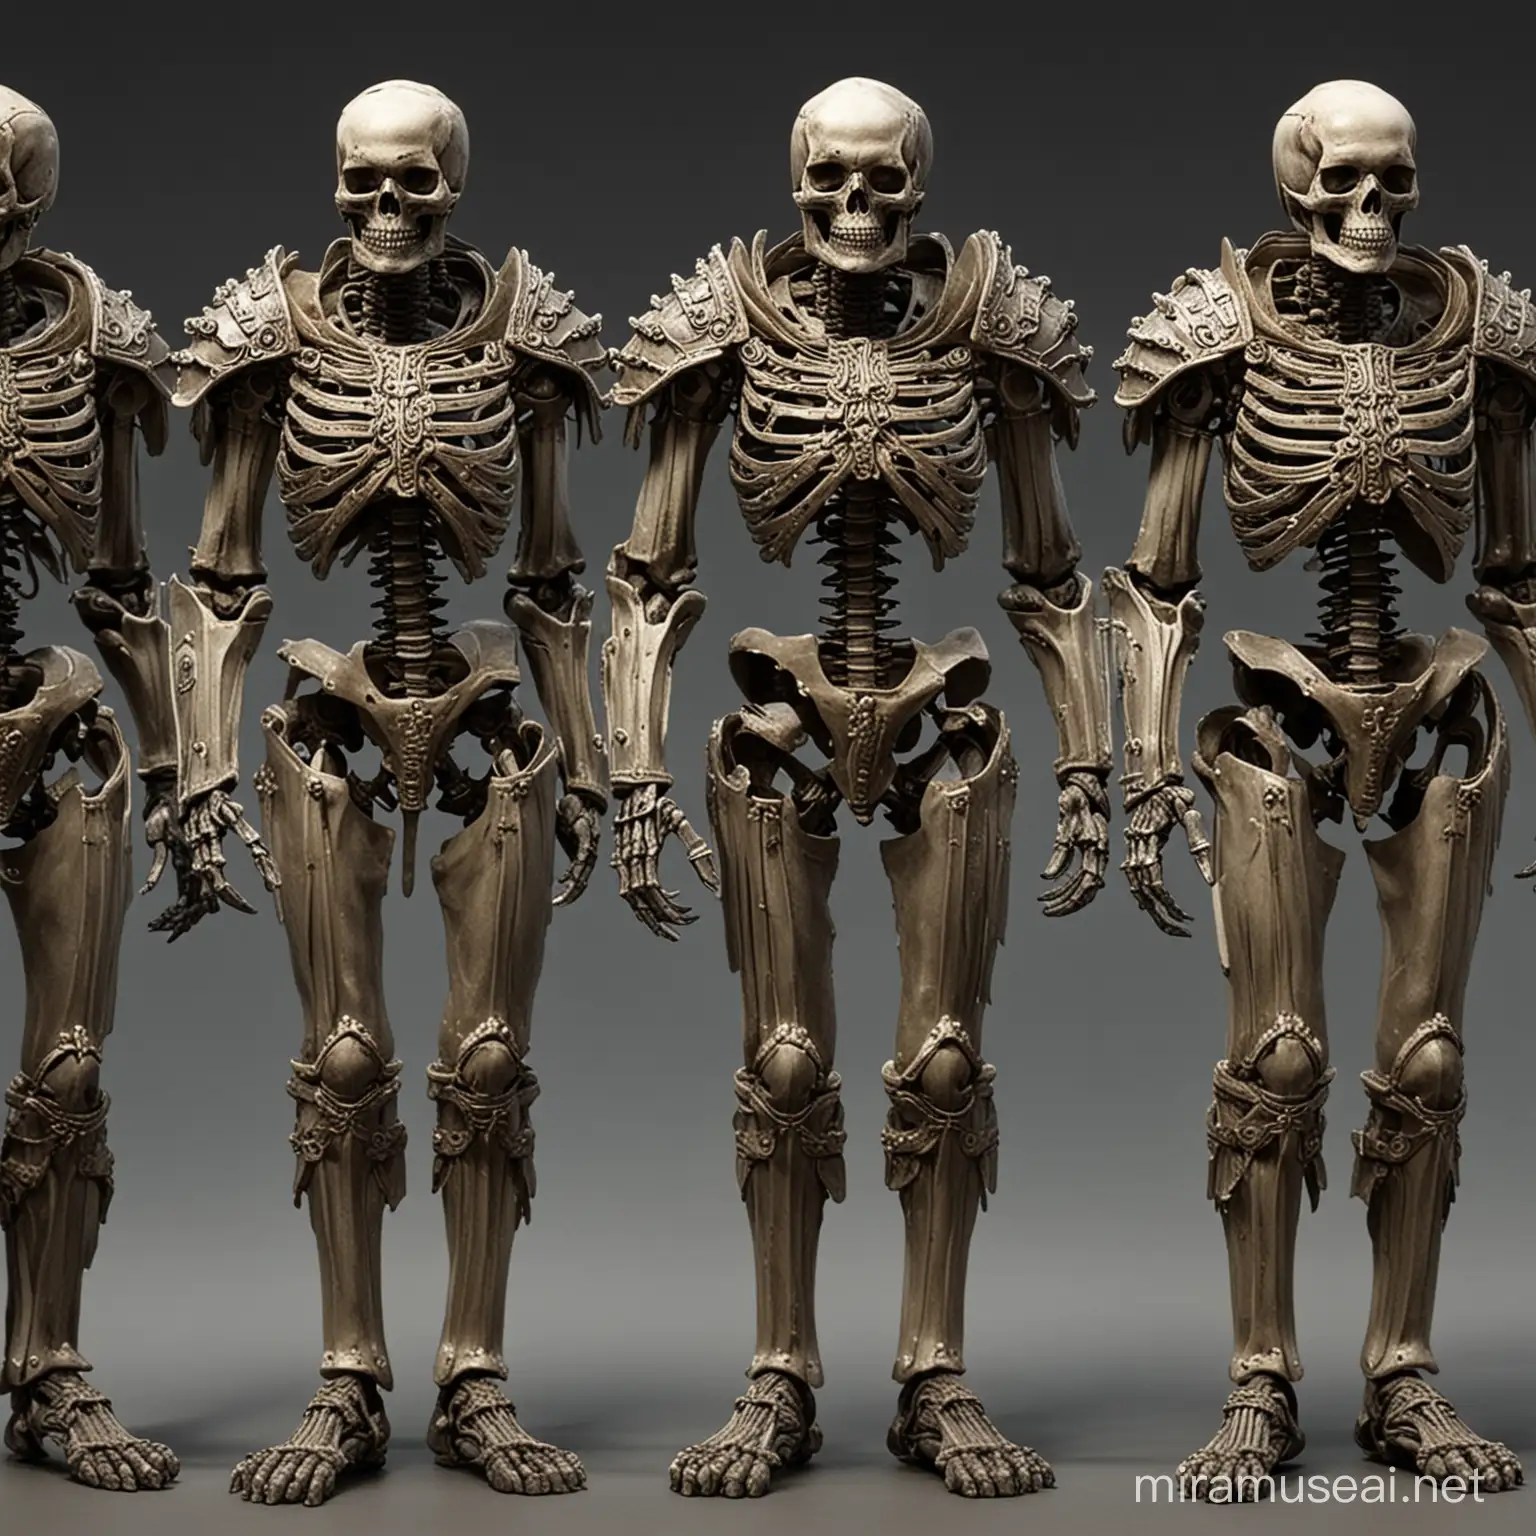 skeleton army
ancient
half armor